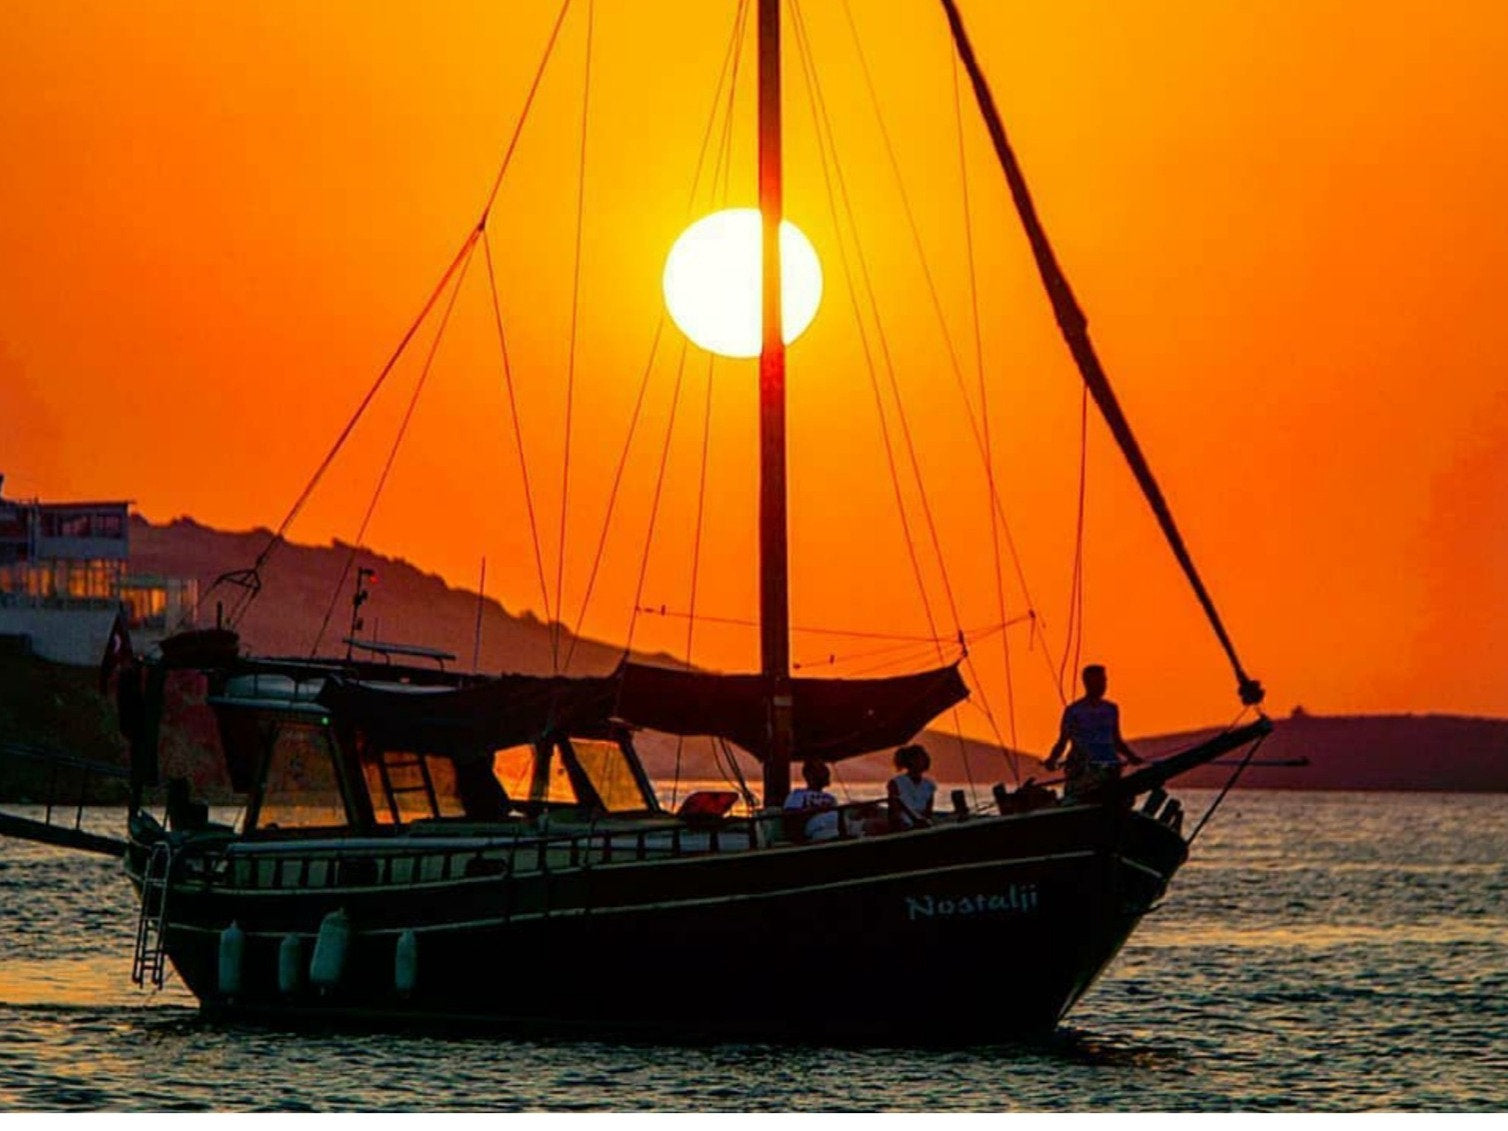 Kemer Sunset Suluada Island Boat Tour - Tripventura